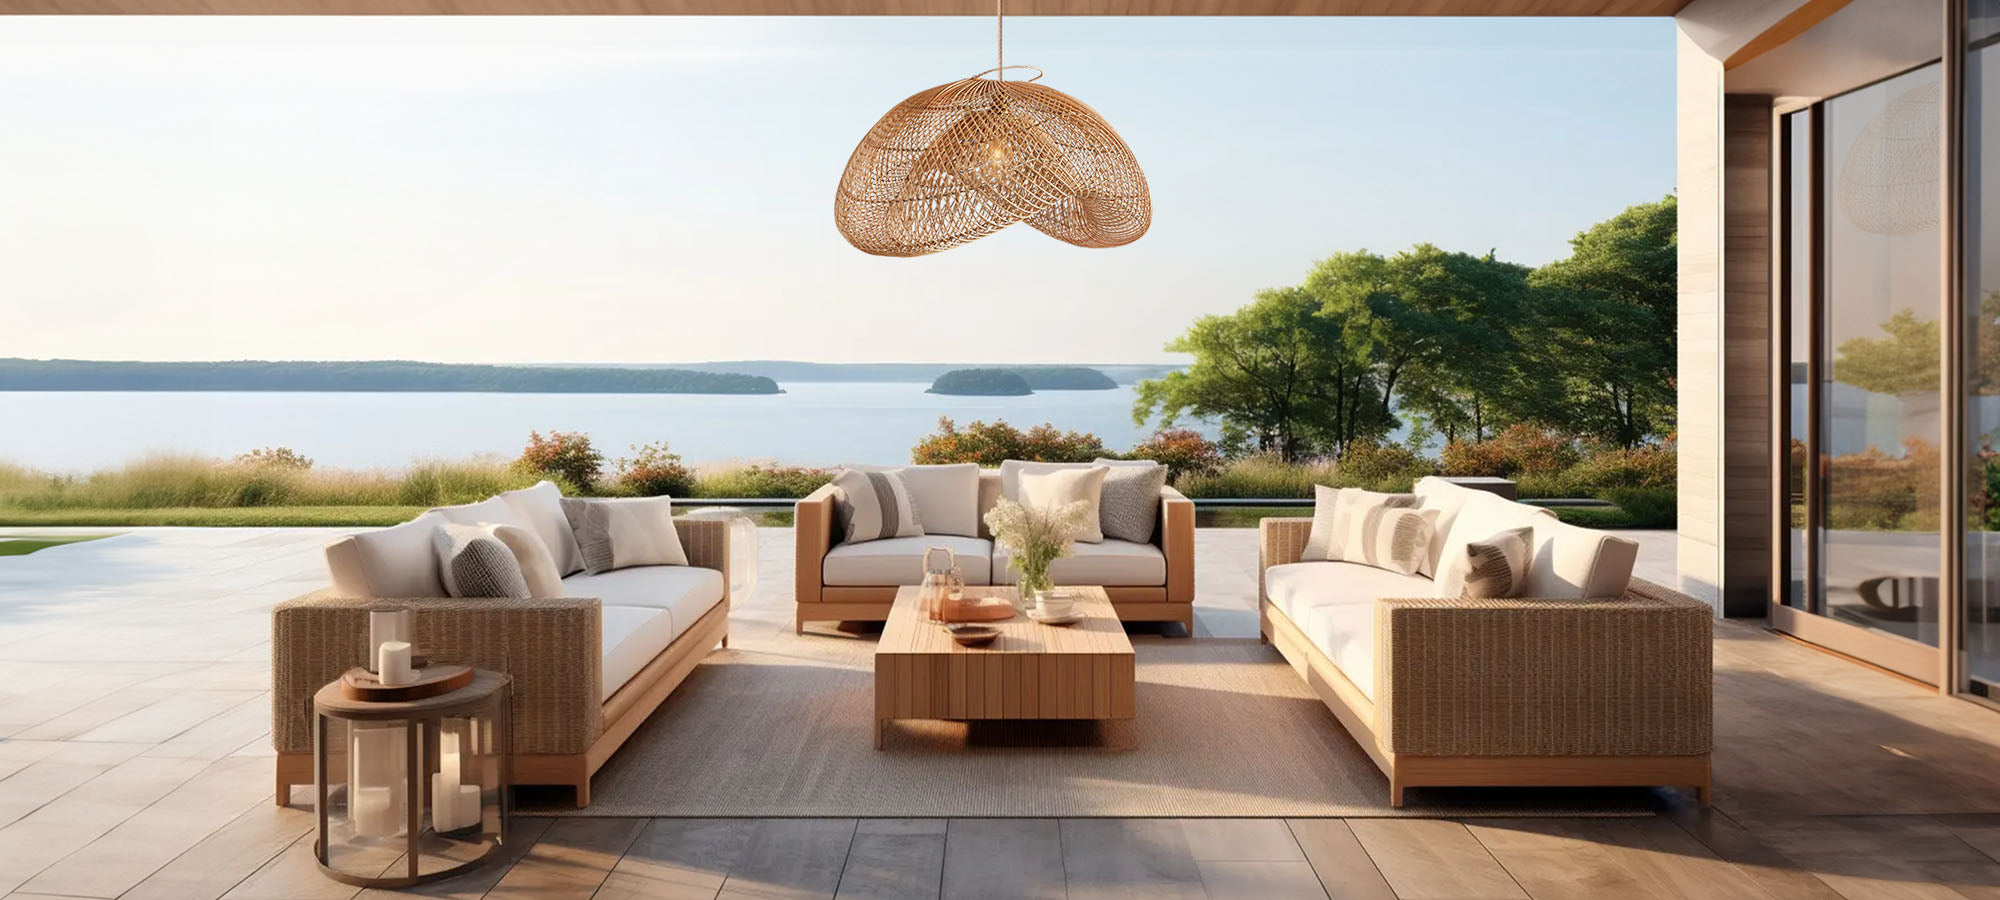 rowabi high end rattan pendant lights for outdoor decor